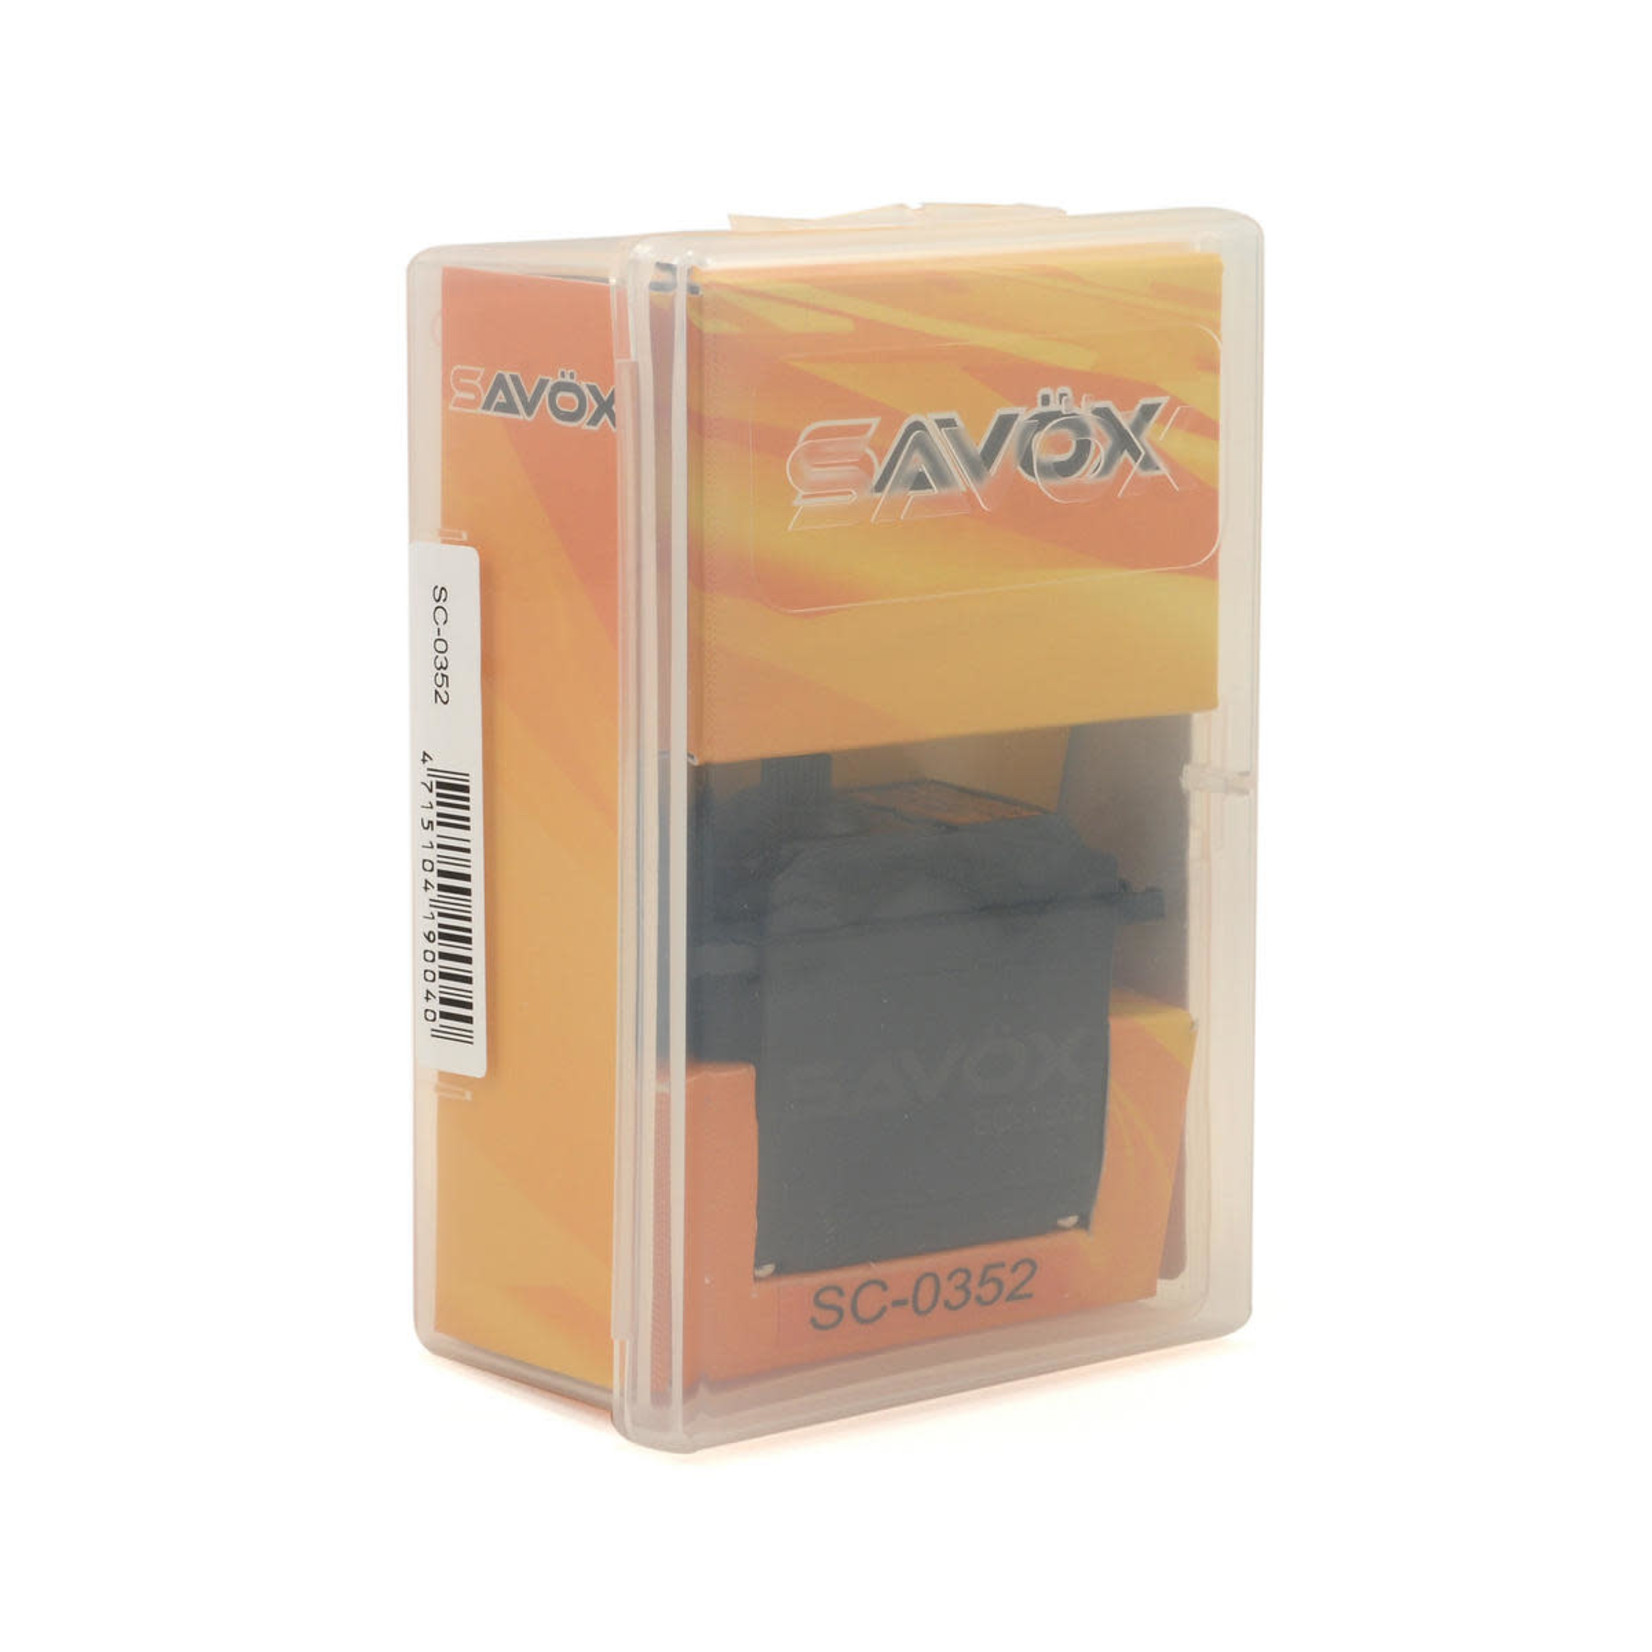 Savox Savox SC-0352 Standard Digital Servo